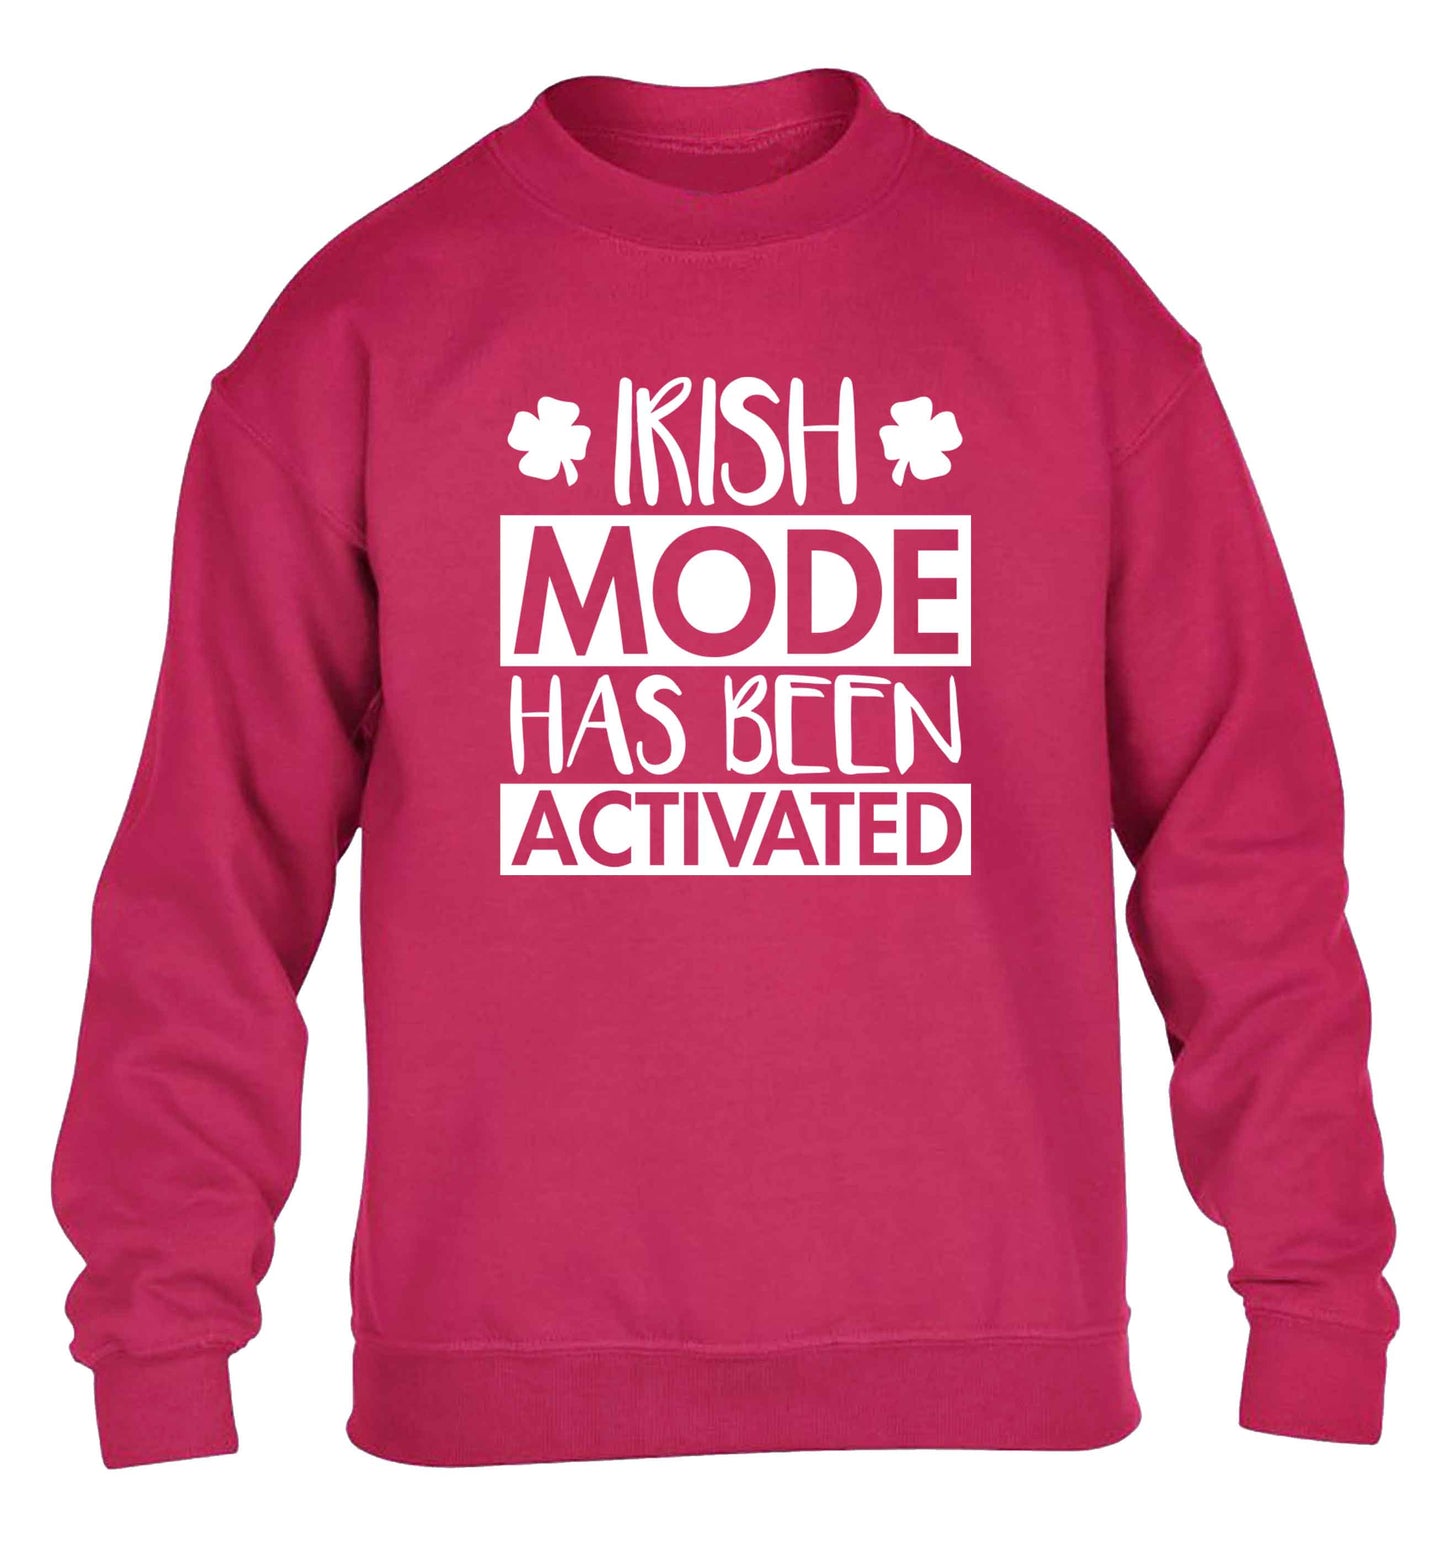 Irish mode has been activated children's pink sweater 12-13 Years